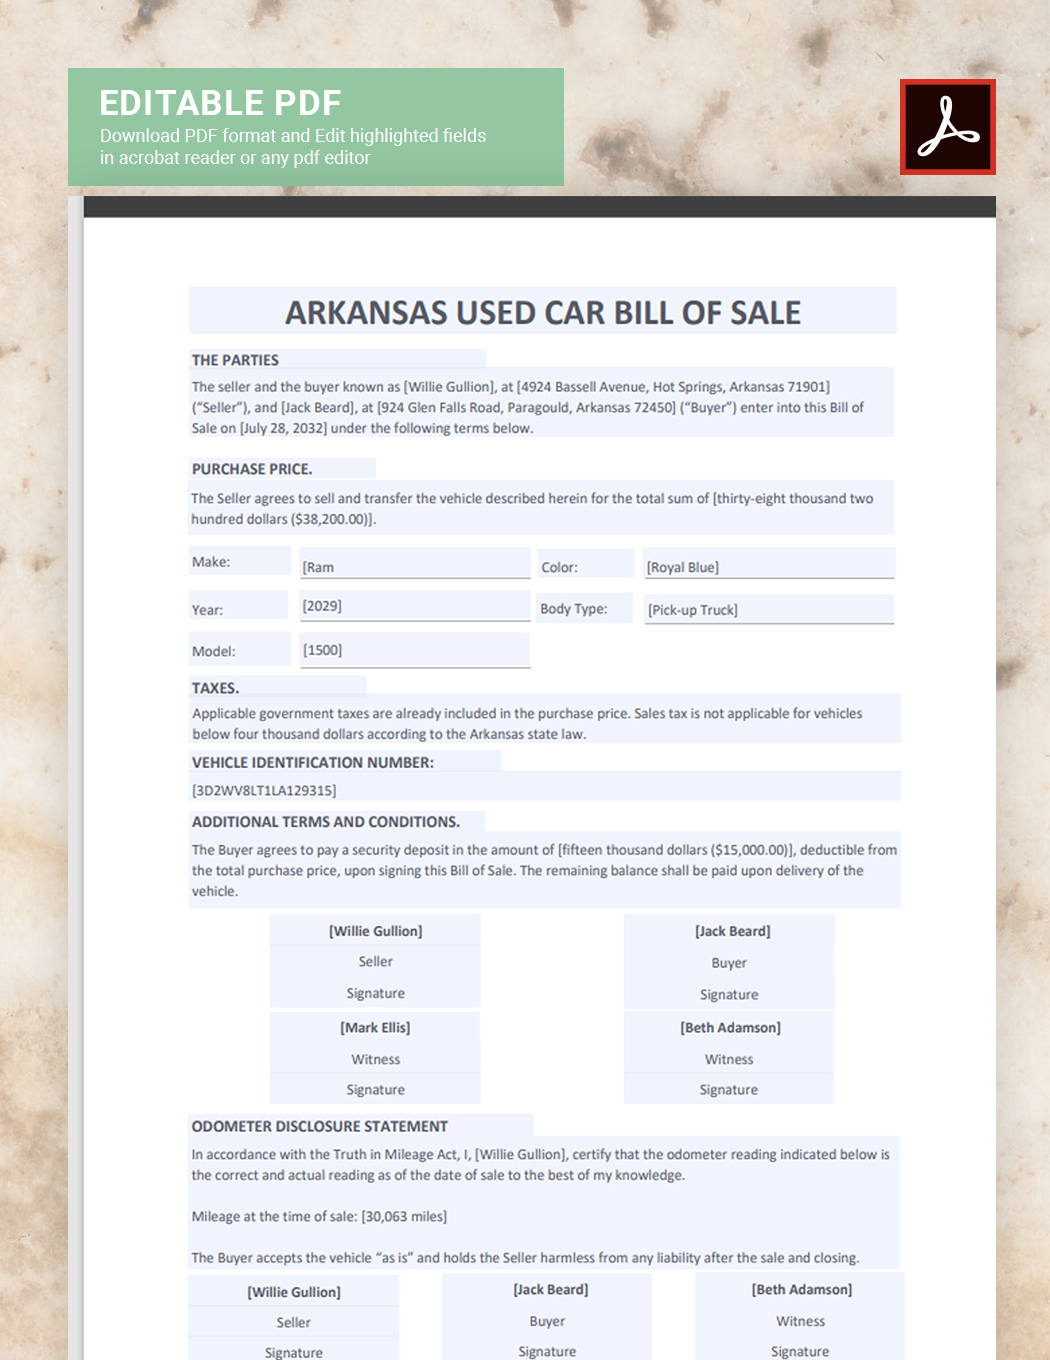 Arkansas Used Car Bill of Sale Template - Google Docs, Word, PDF